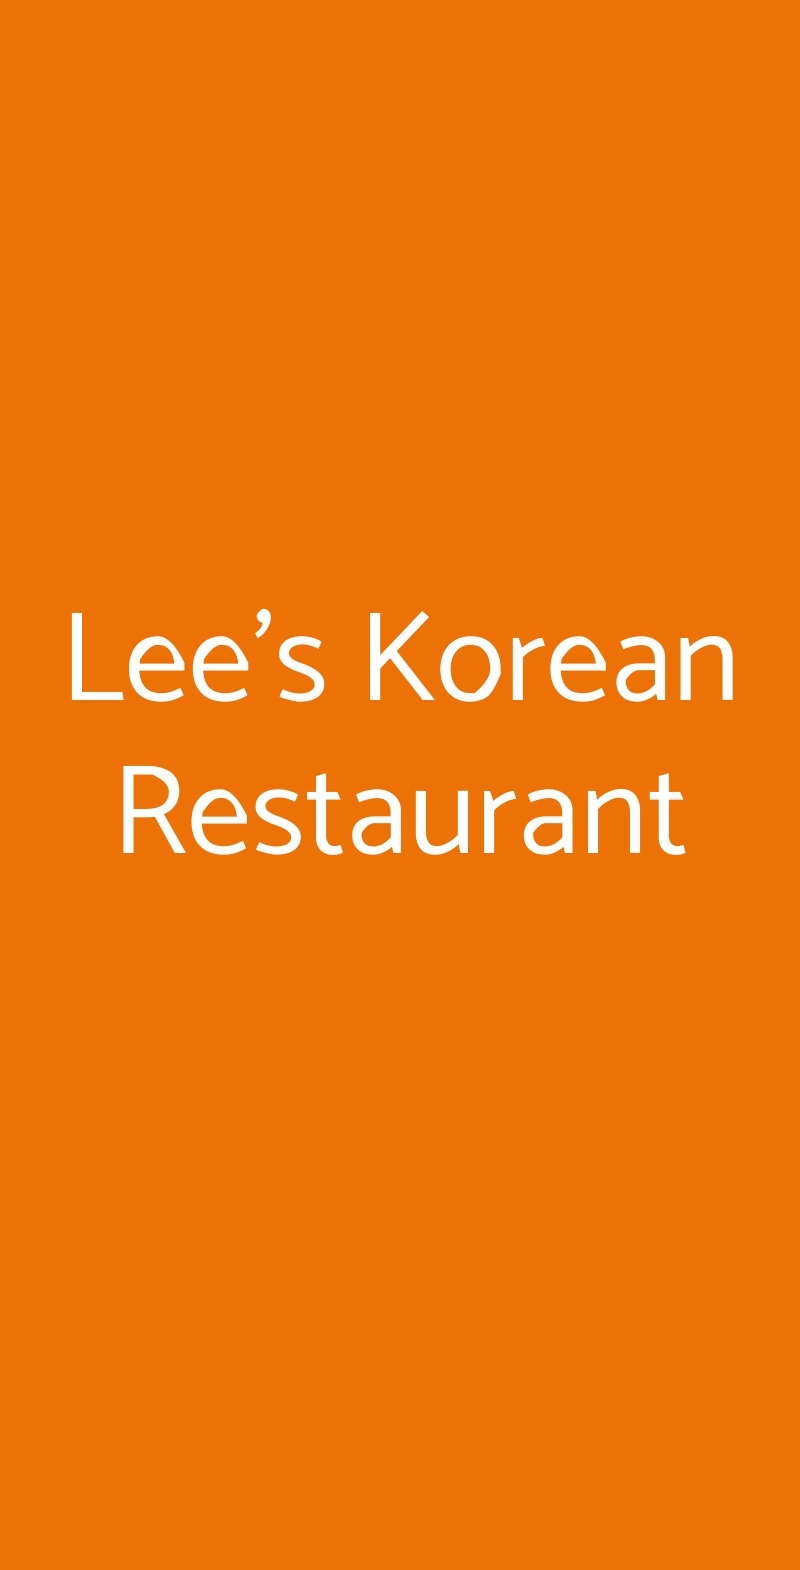 Lee's Korean Restaurant Milano menù 1 pagina